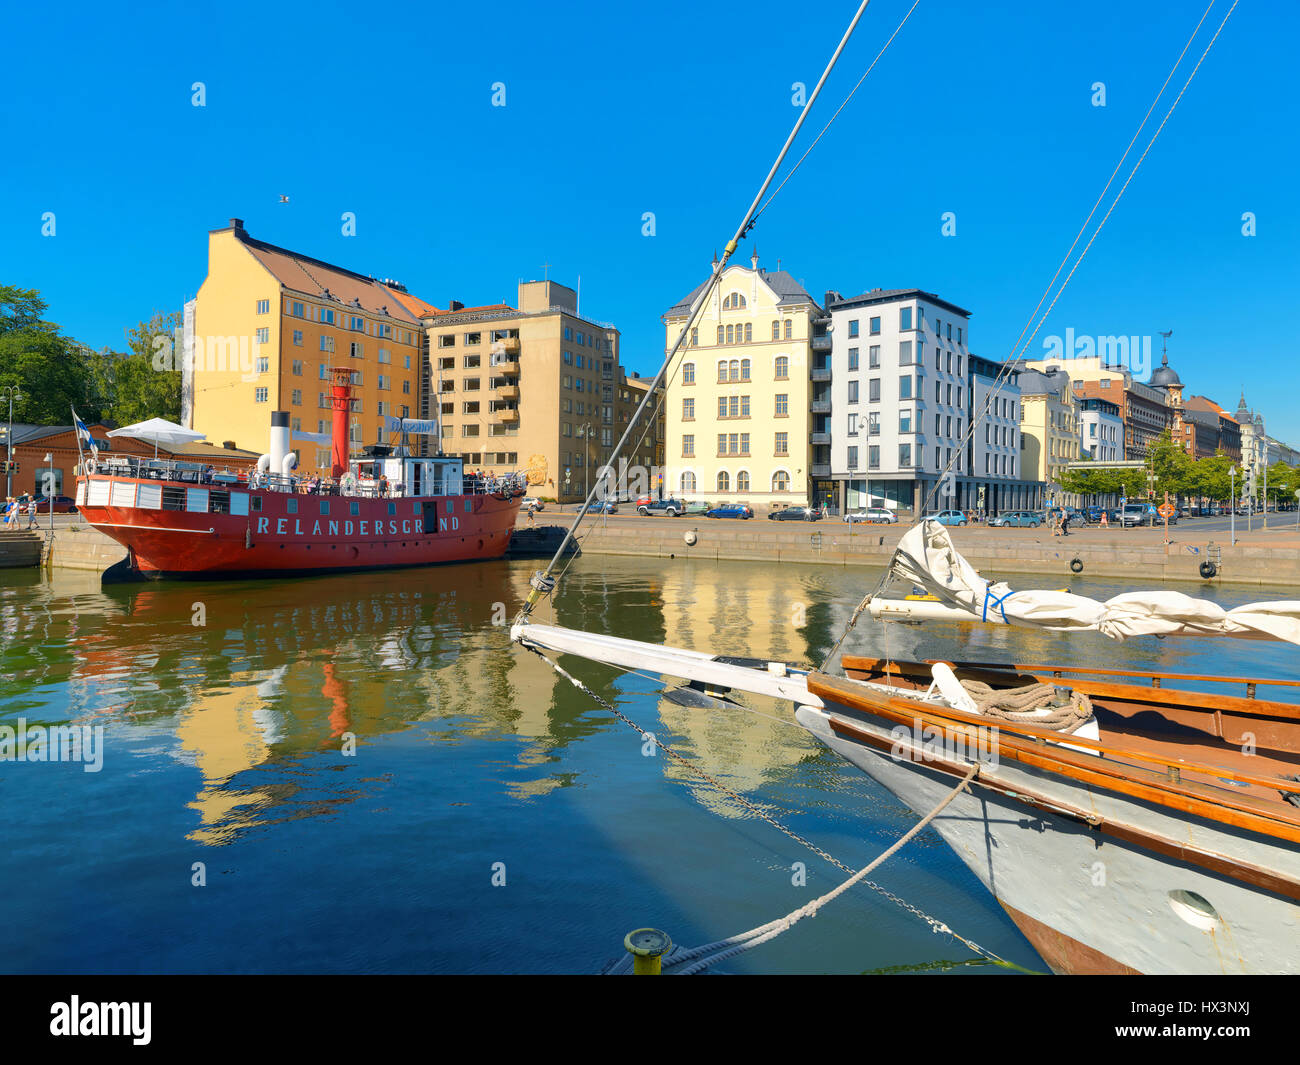 Apartment buildings and pier with famous restaurant Relandersgrund lightship. Helsinki, Finland, Scandinavia Stock Photo